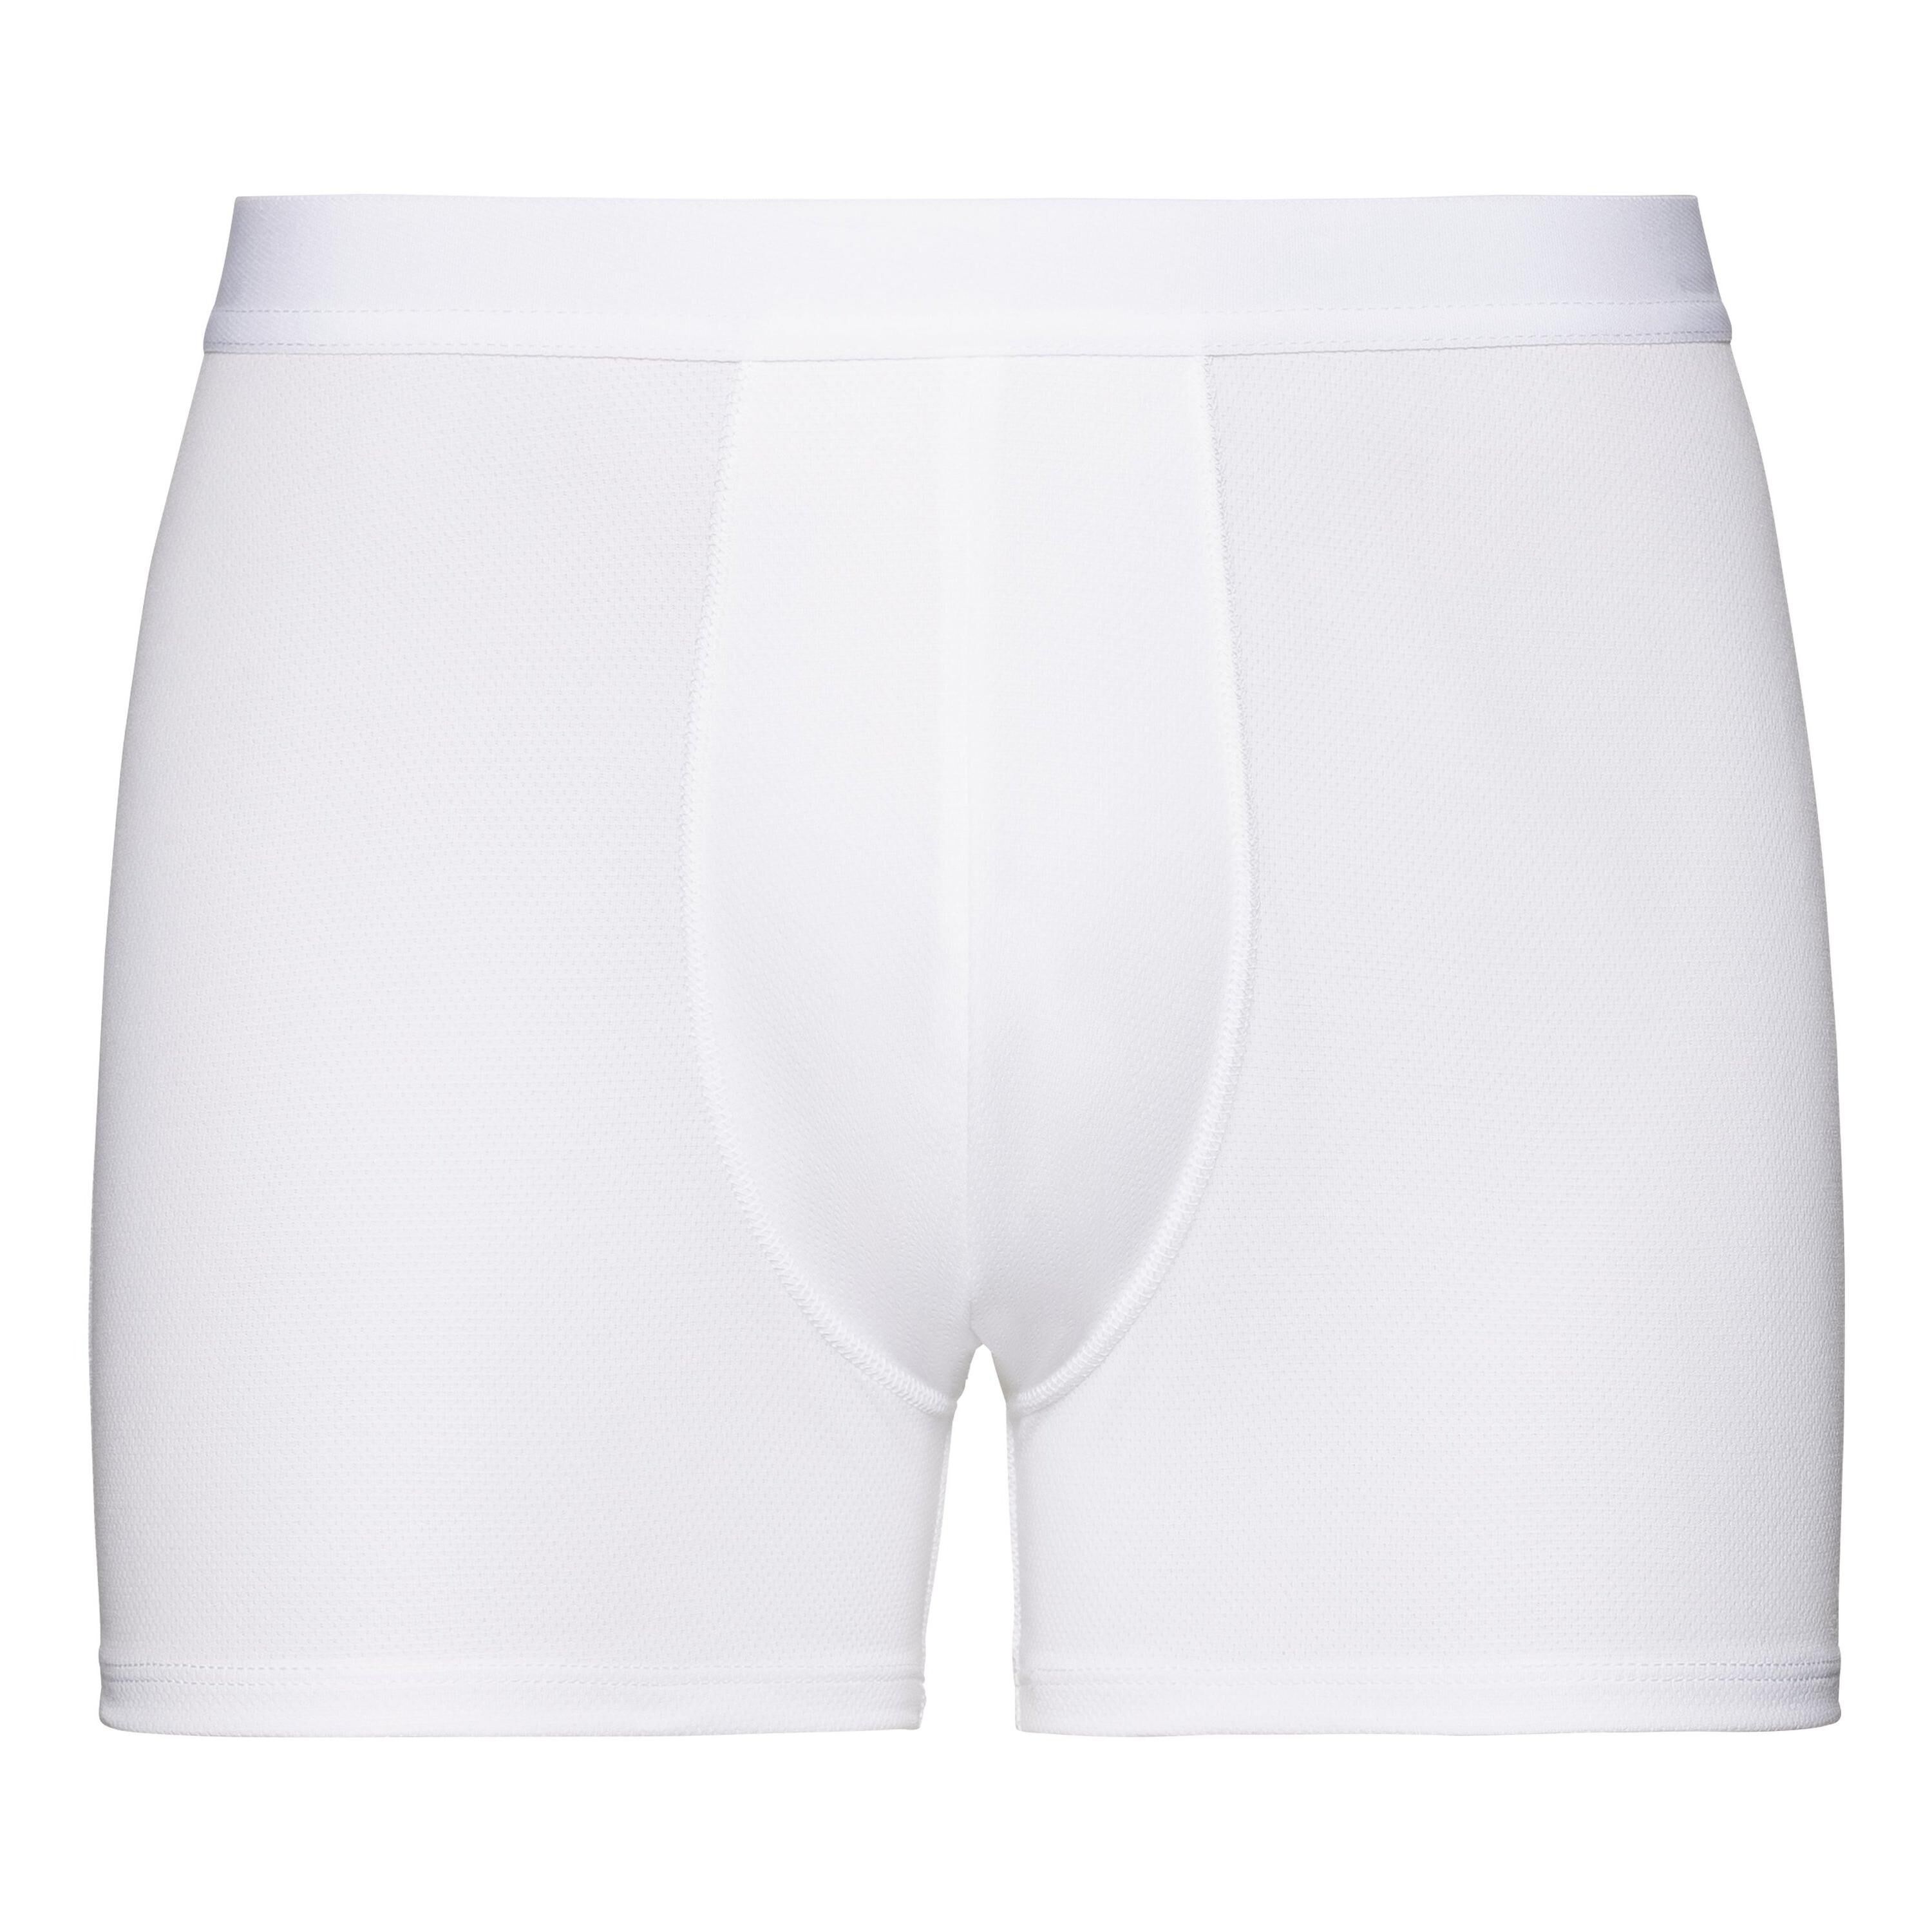 Odlo Active F-Dry Light - Underwear - Men's